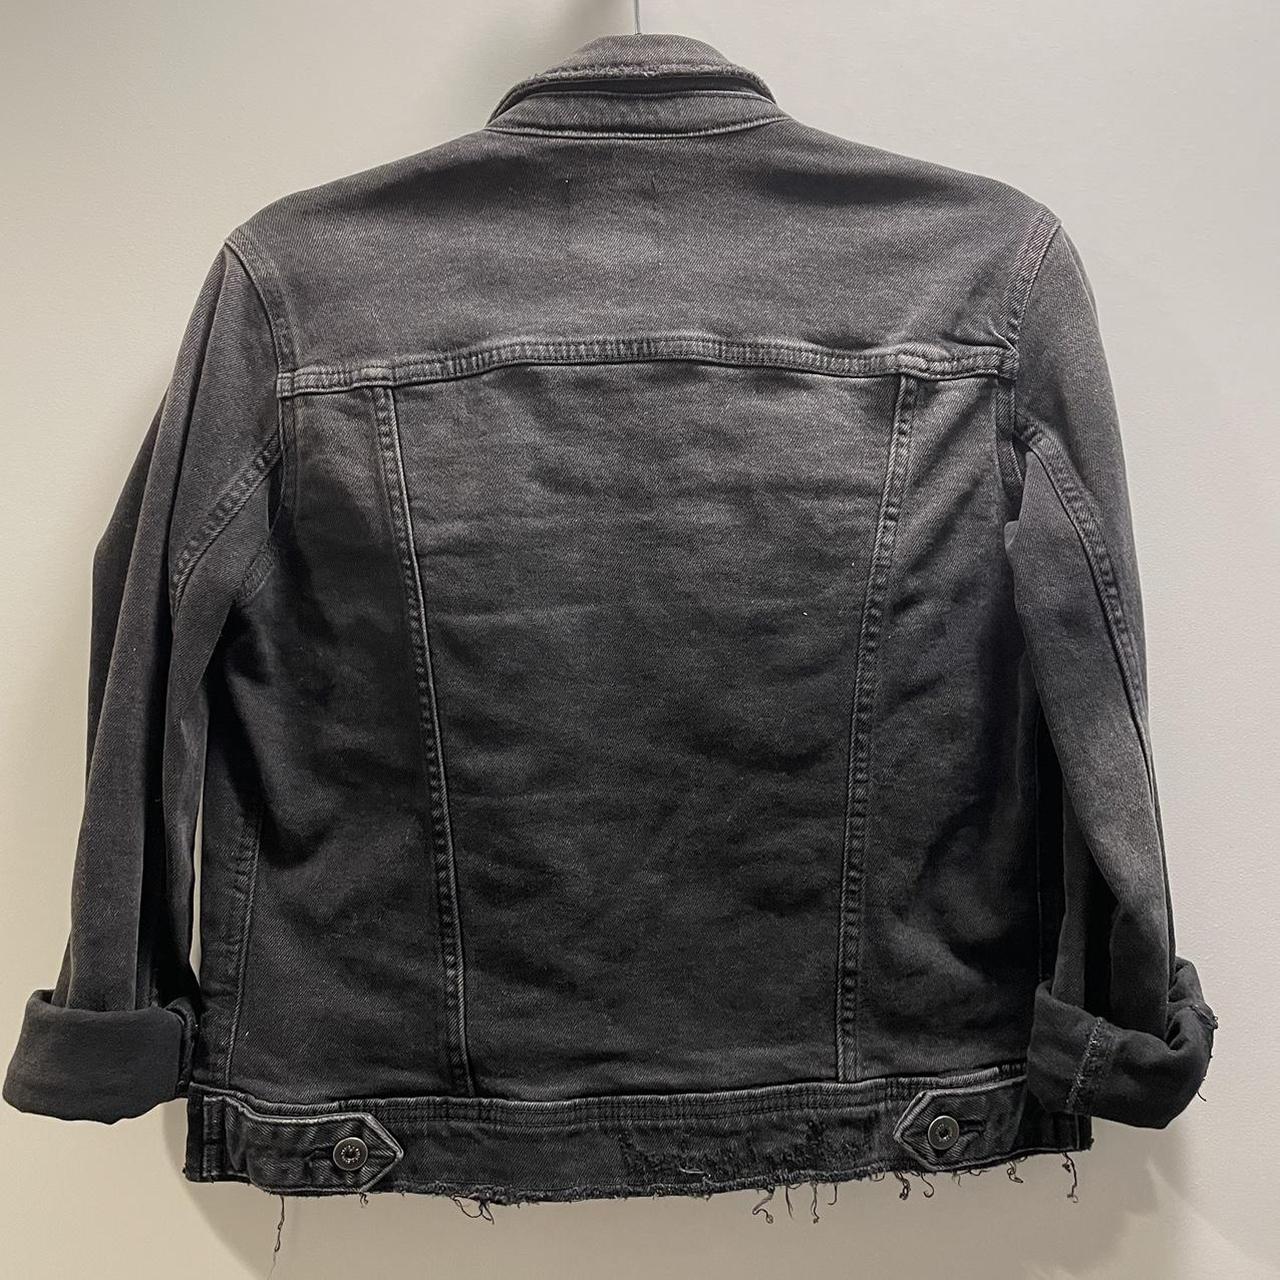 Zara | Jackets & Coats | Zara Black Denim Jacket | Poshmark